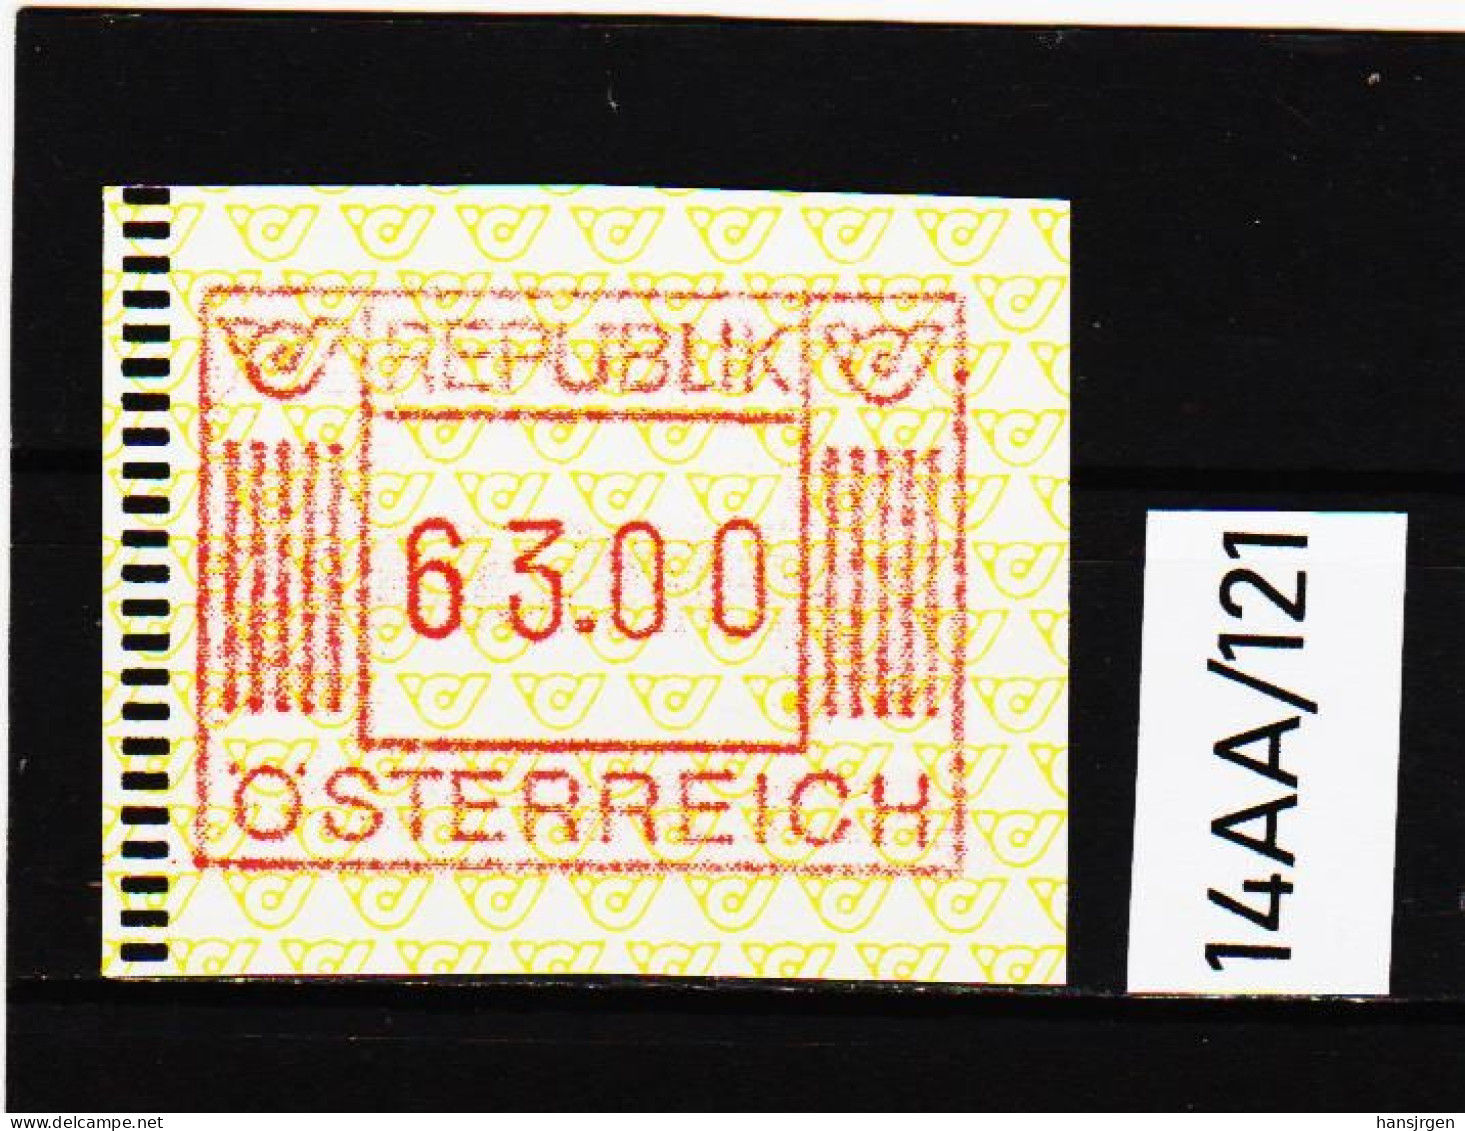 14AA/121  ÖSTERREICH 1983 AUTOMATENMARKEN  A N K  1. AUSGABE  63,00 SCHILLING   ** Postfrisch - Timbres De Distributeurs [ATM]